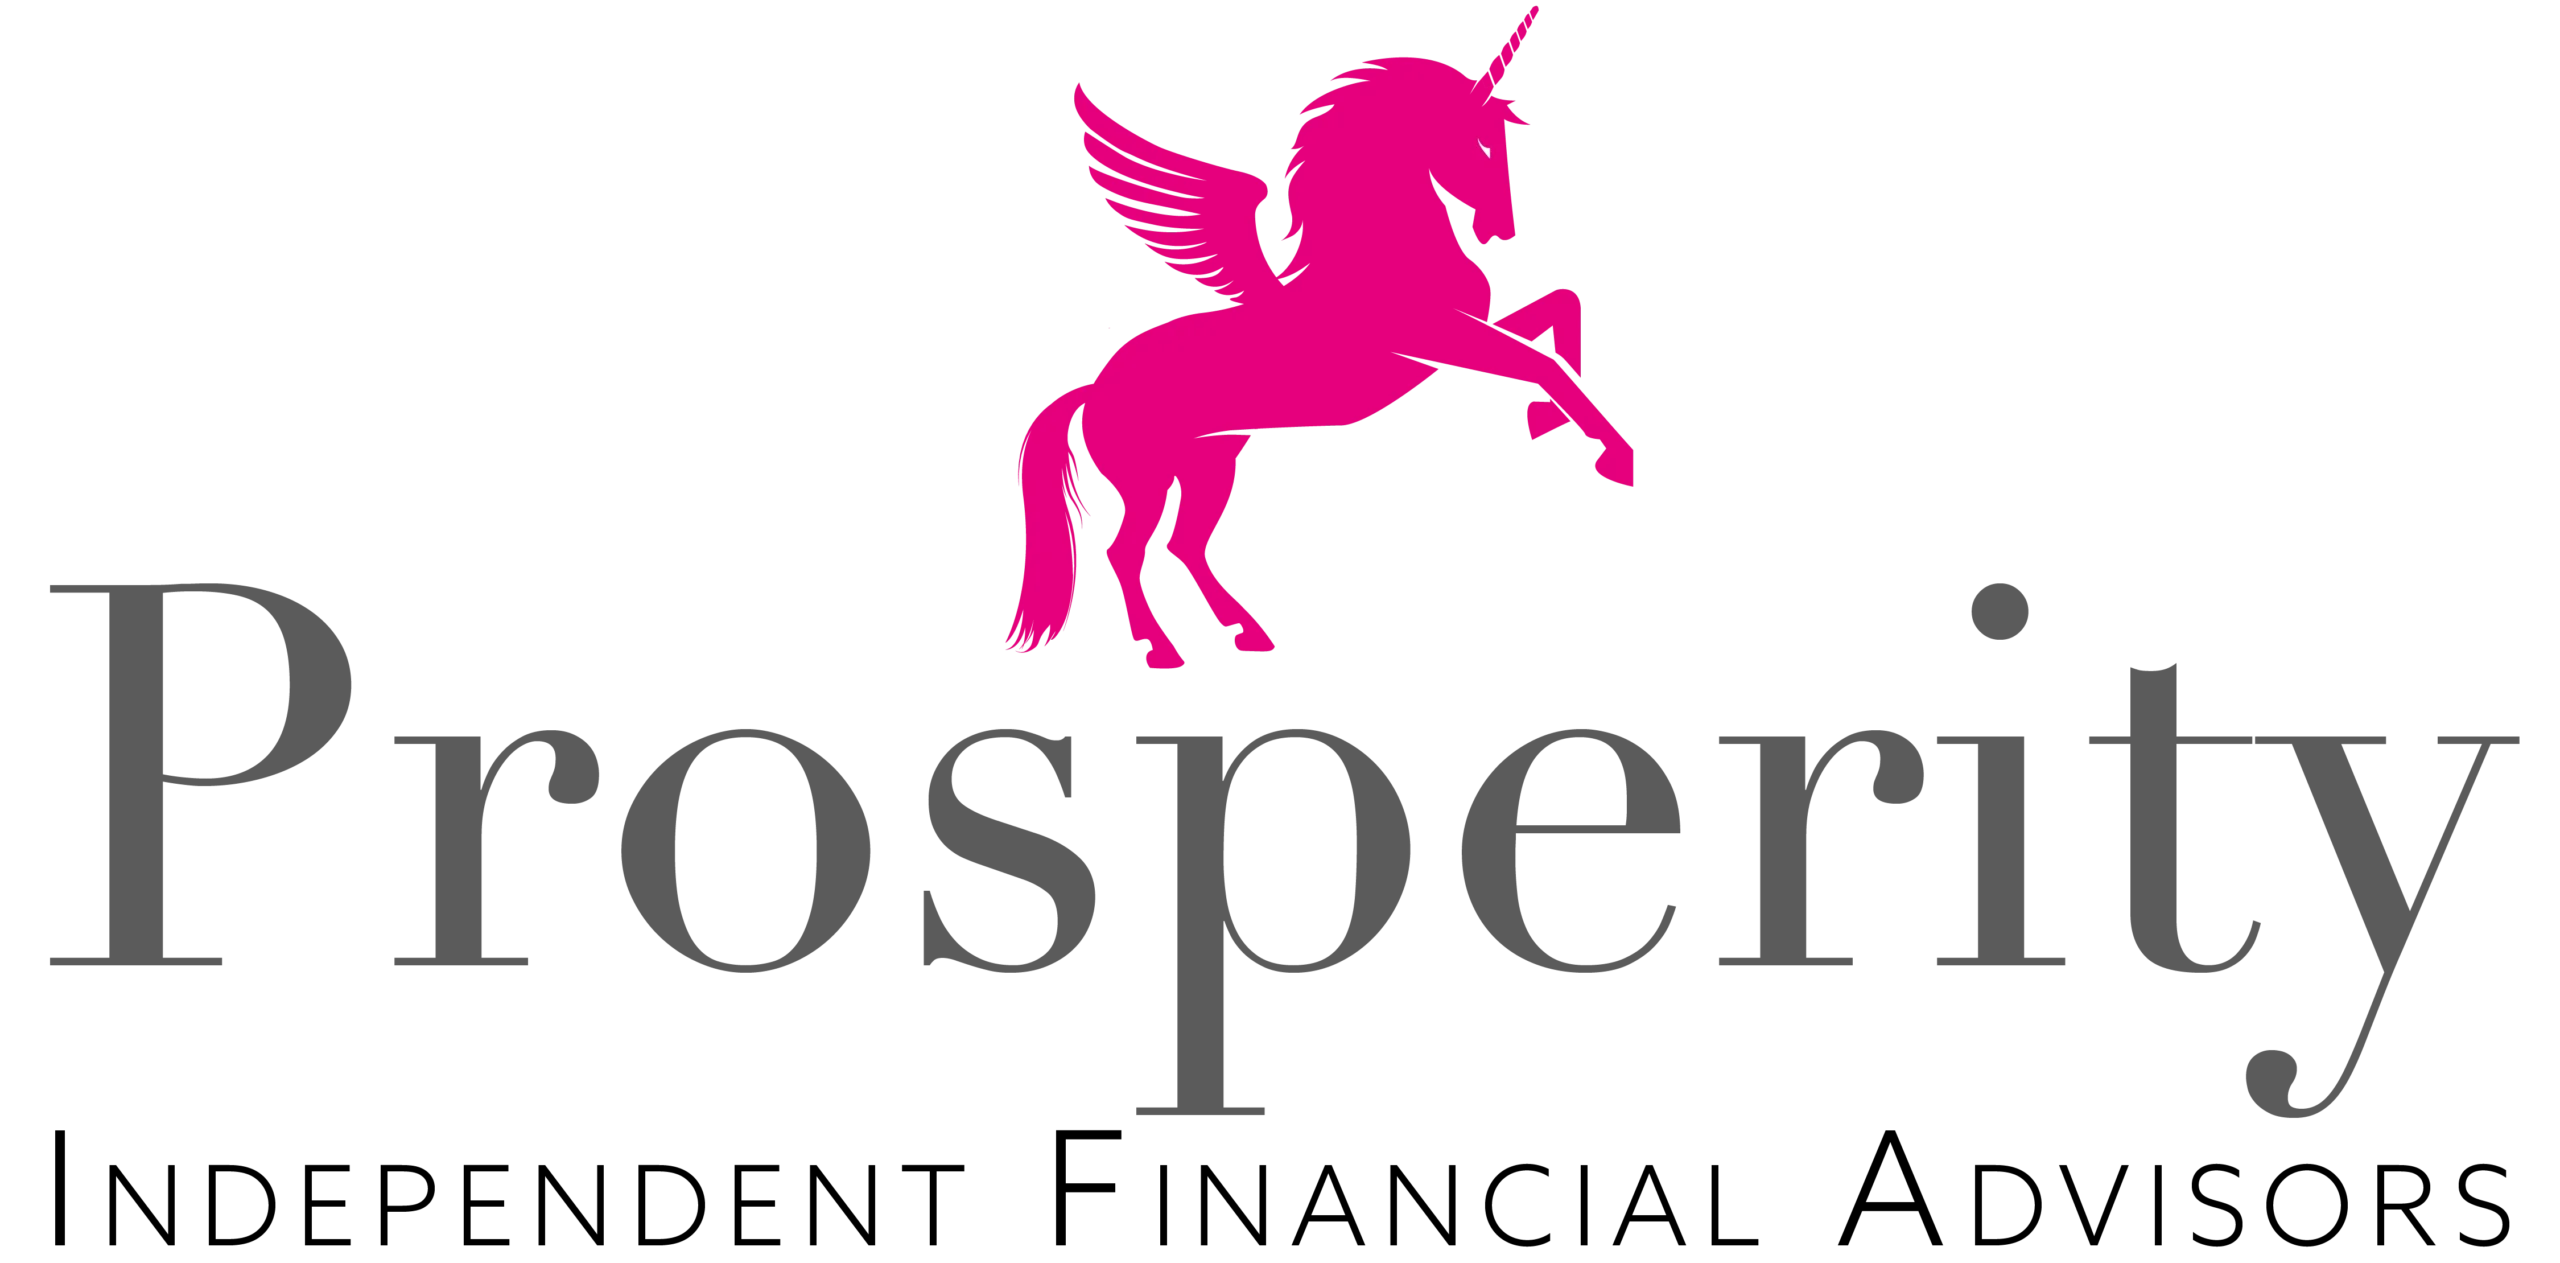 Prosperity Logo